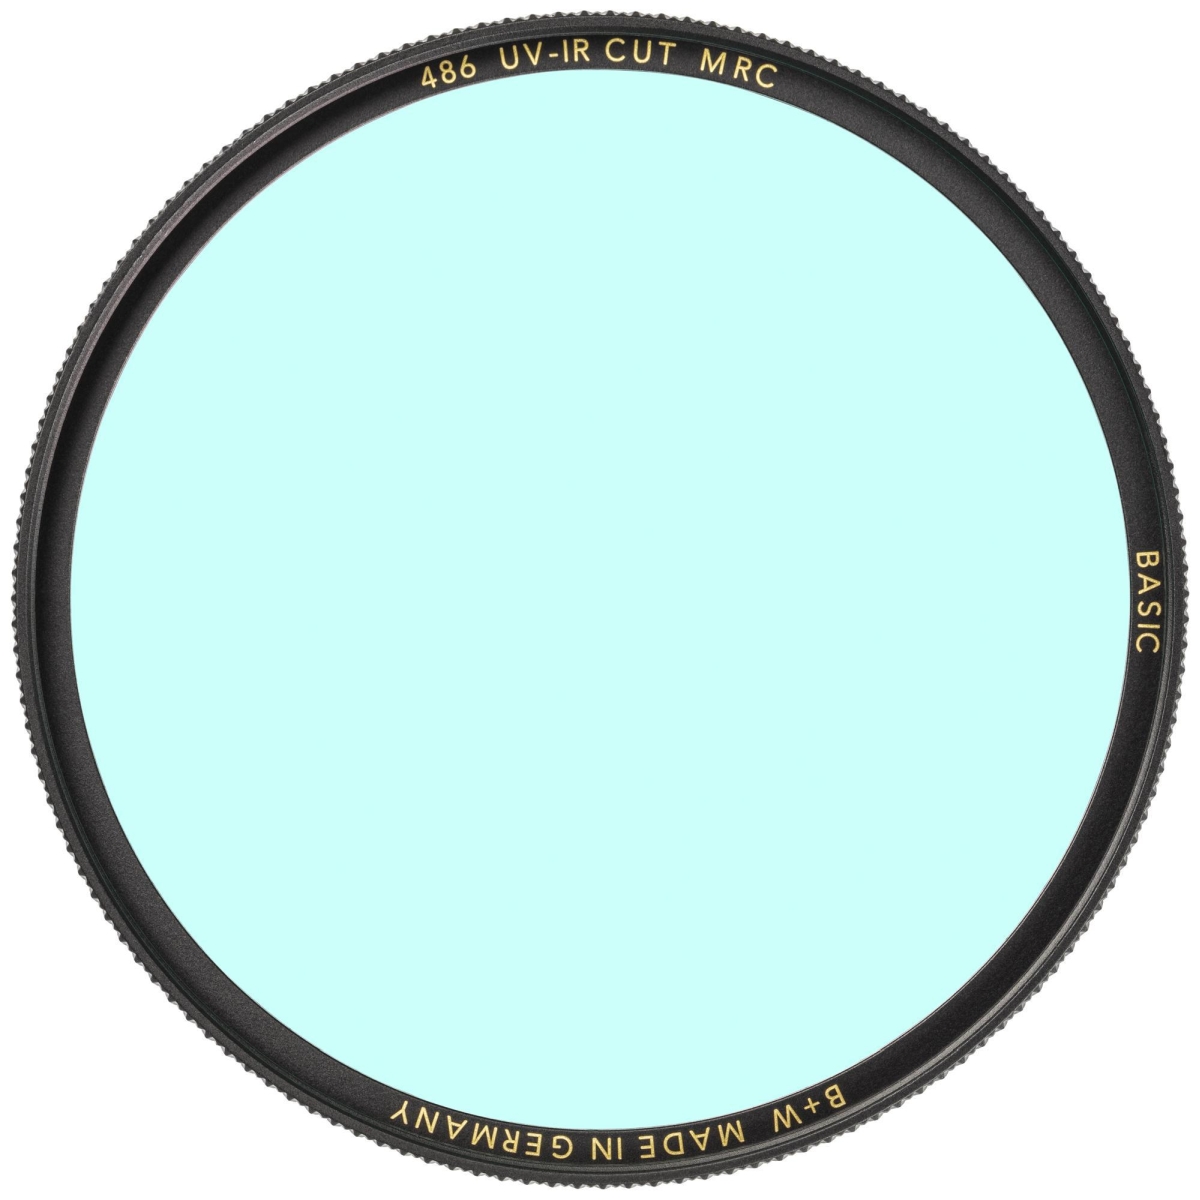 B+W UV-IR Cut 60 mm MRC Basic